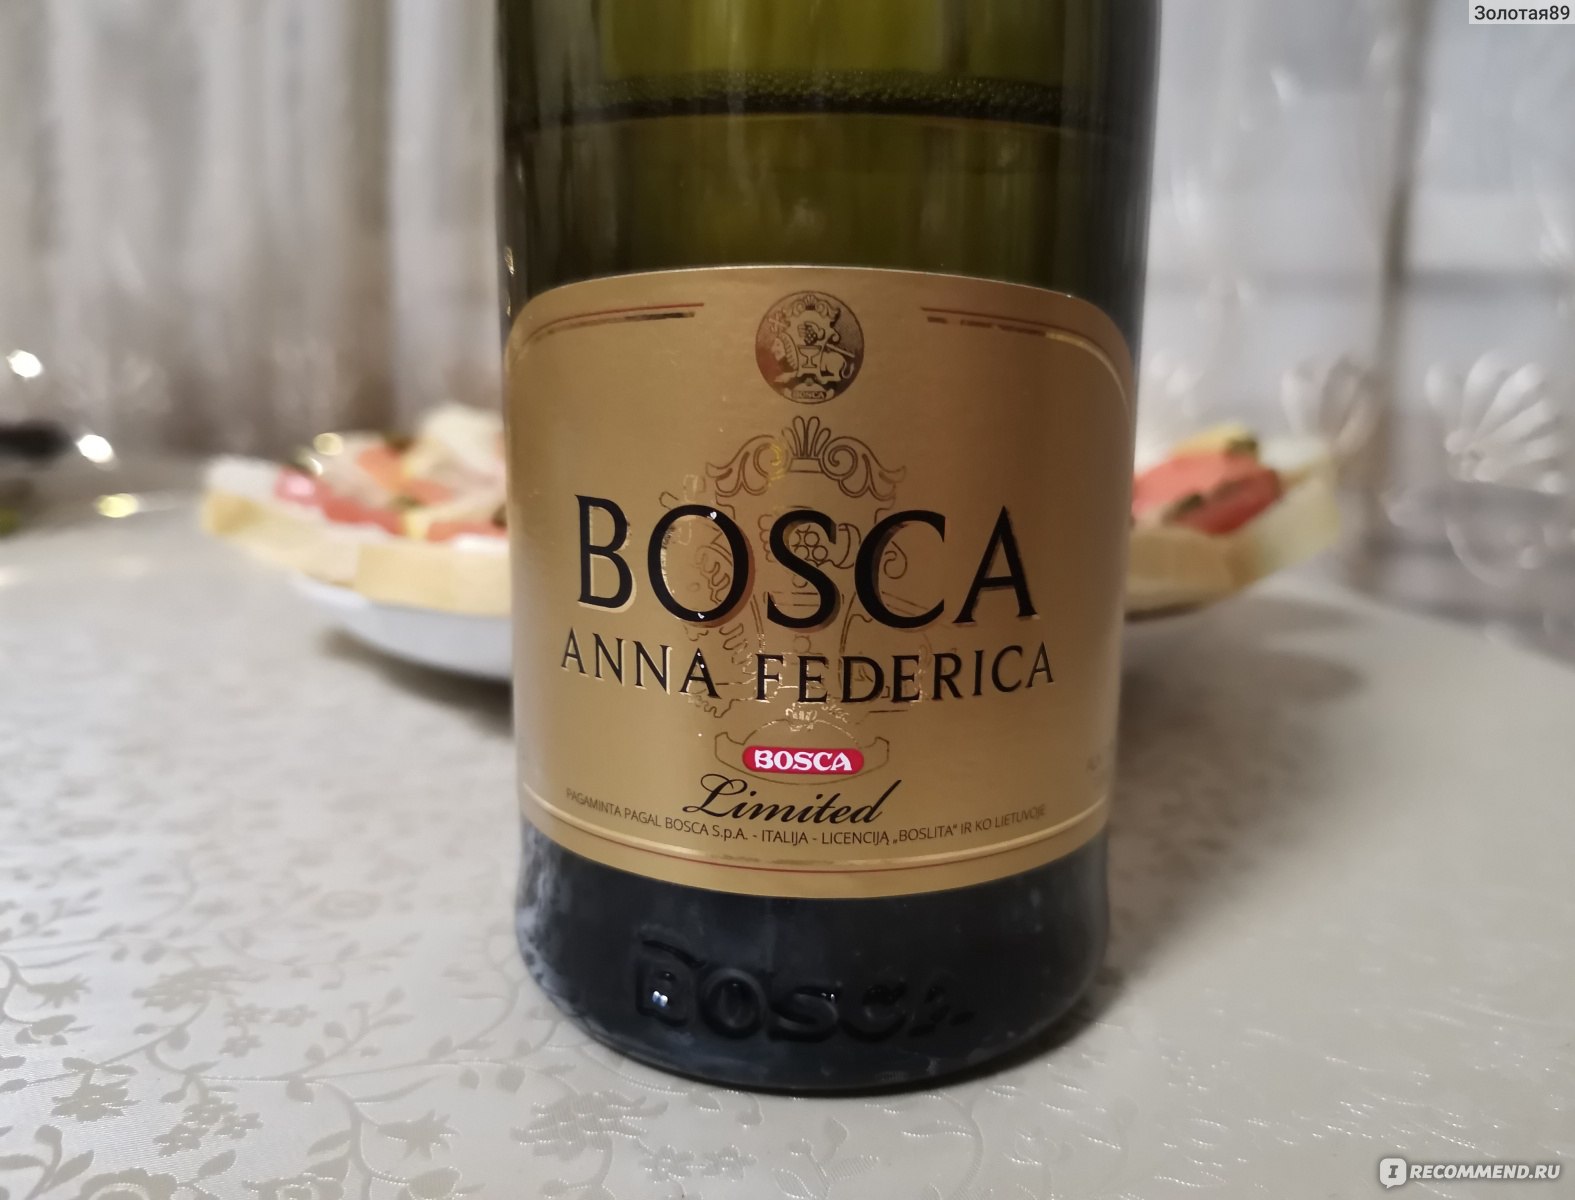 Шампанское боско федерико. Вино Bosca Anna Federica. Bosca Anna Federica Limited шампанское.